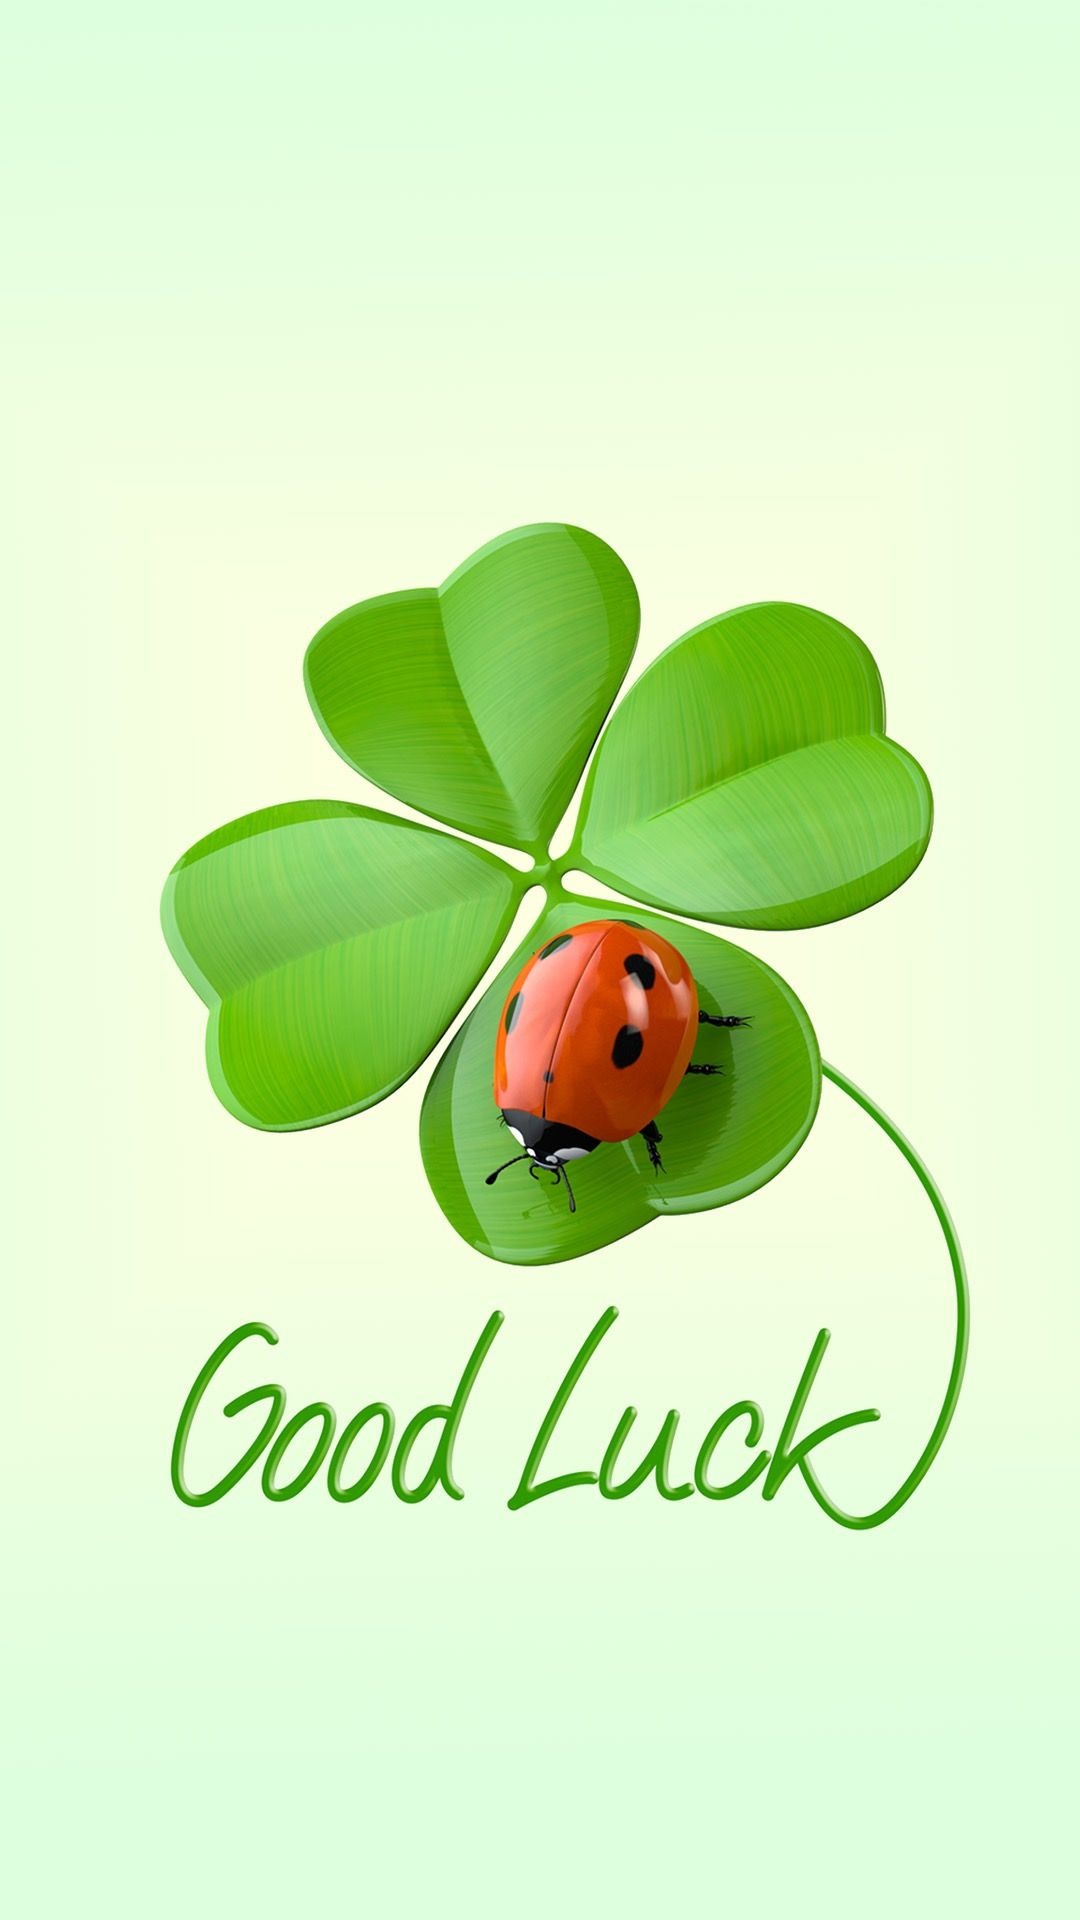 Good Luck: A ladybug on a four-leaf clover, Symbolic, Prosperity sings. 1080x1920 Full HD Wallpaper.